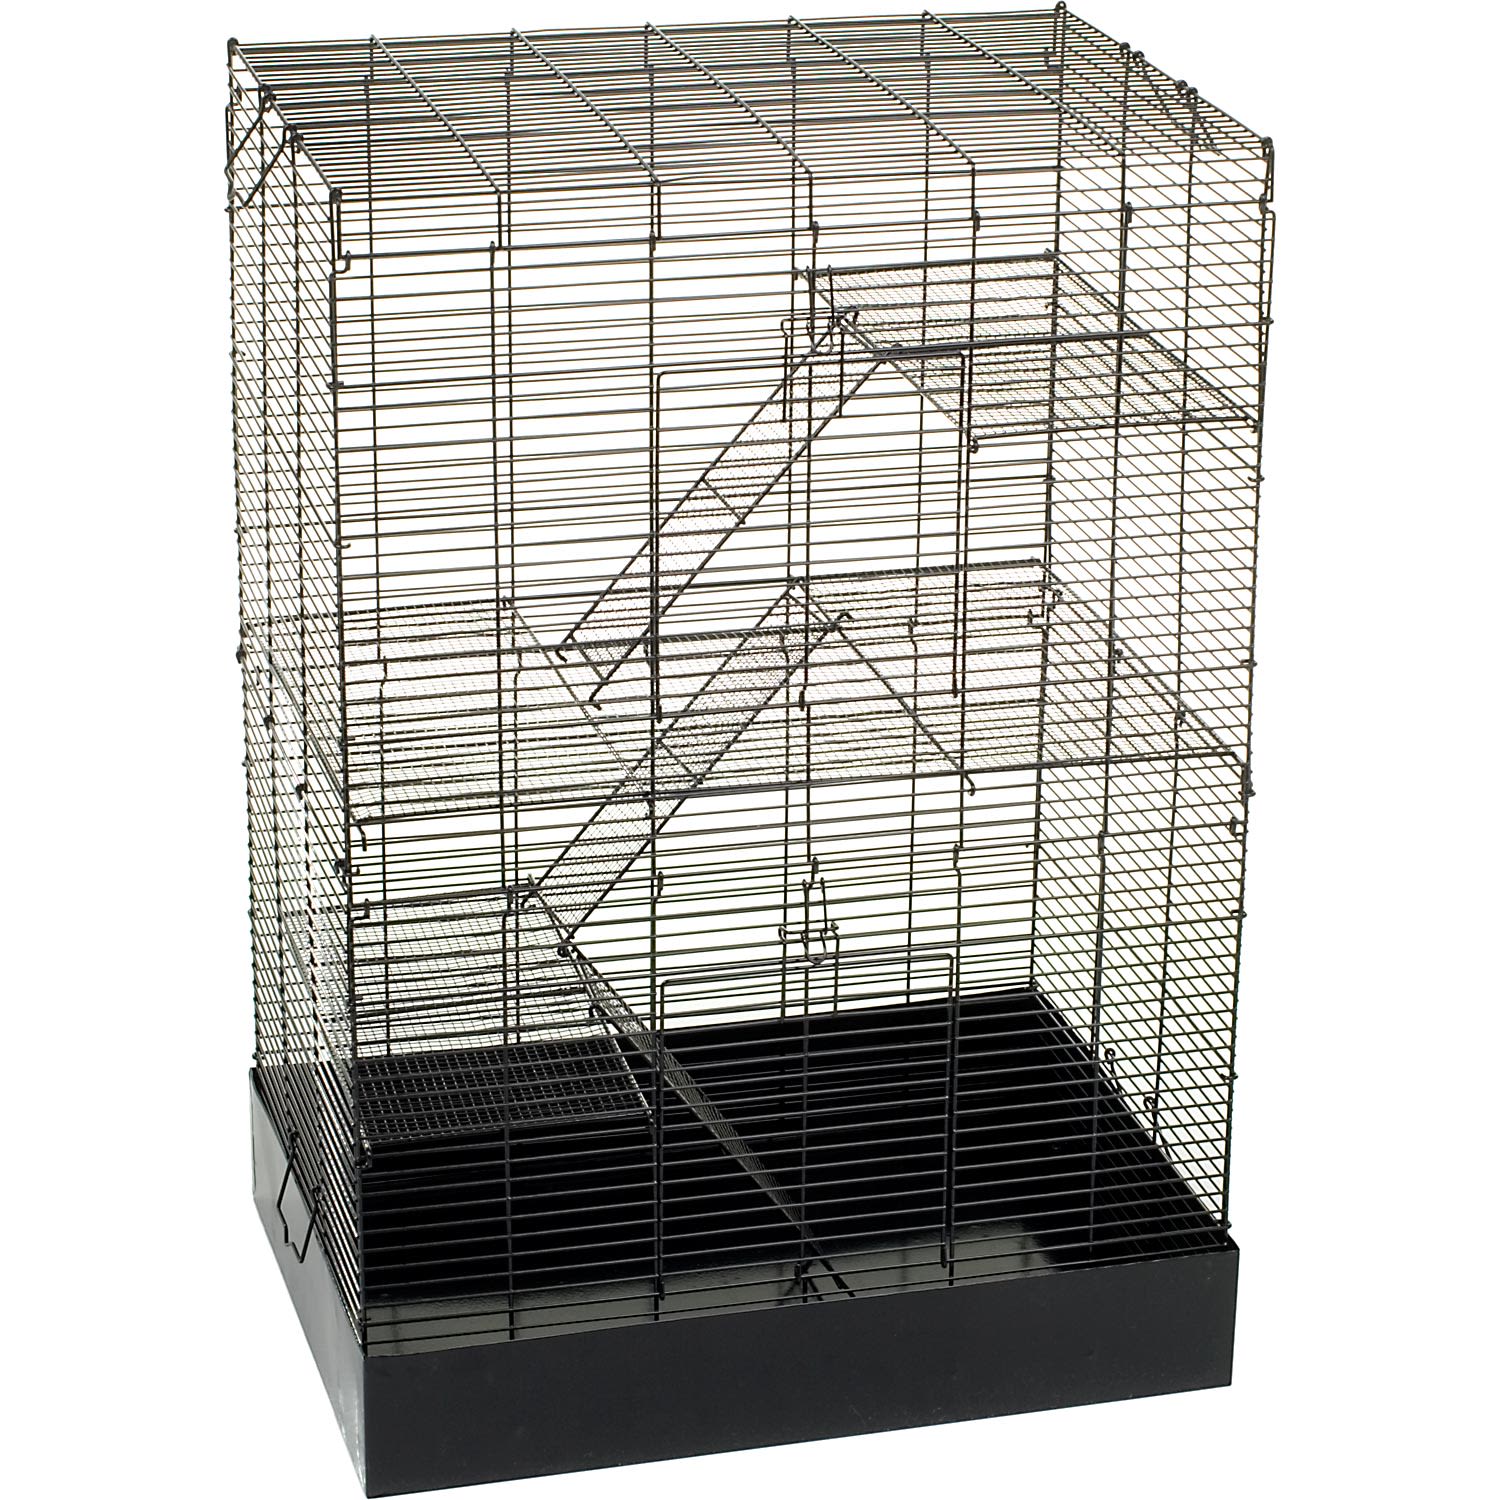 3 story rat cage